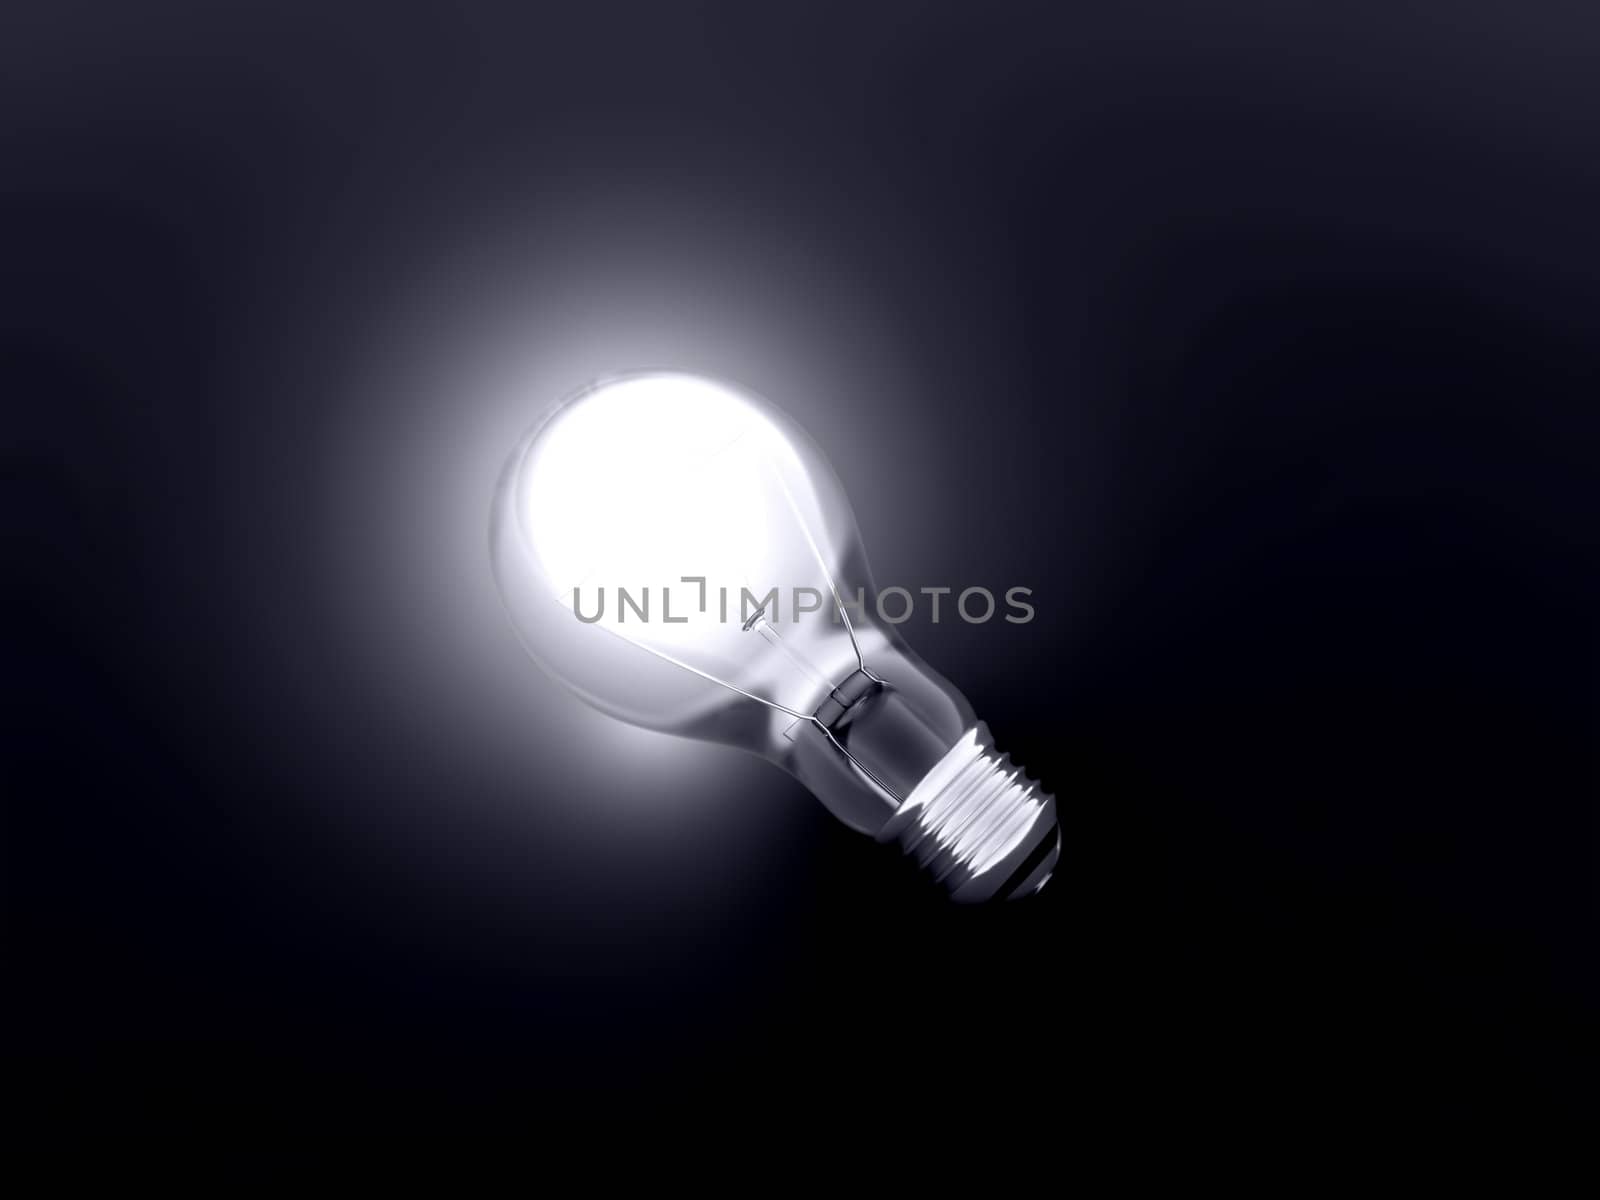 luminous bulb lies on a dark background by Serp